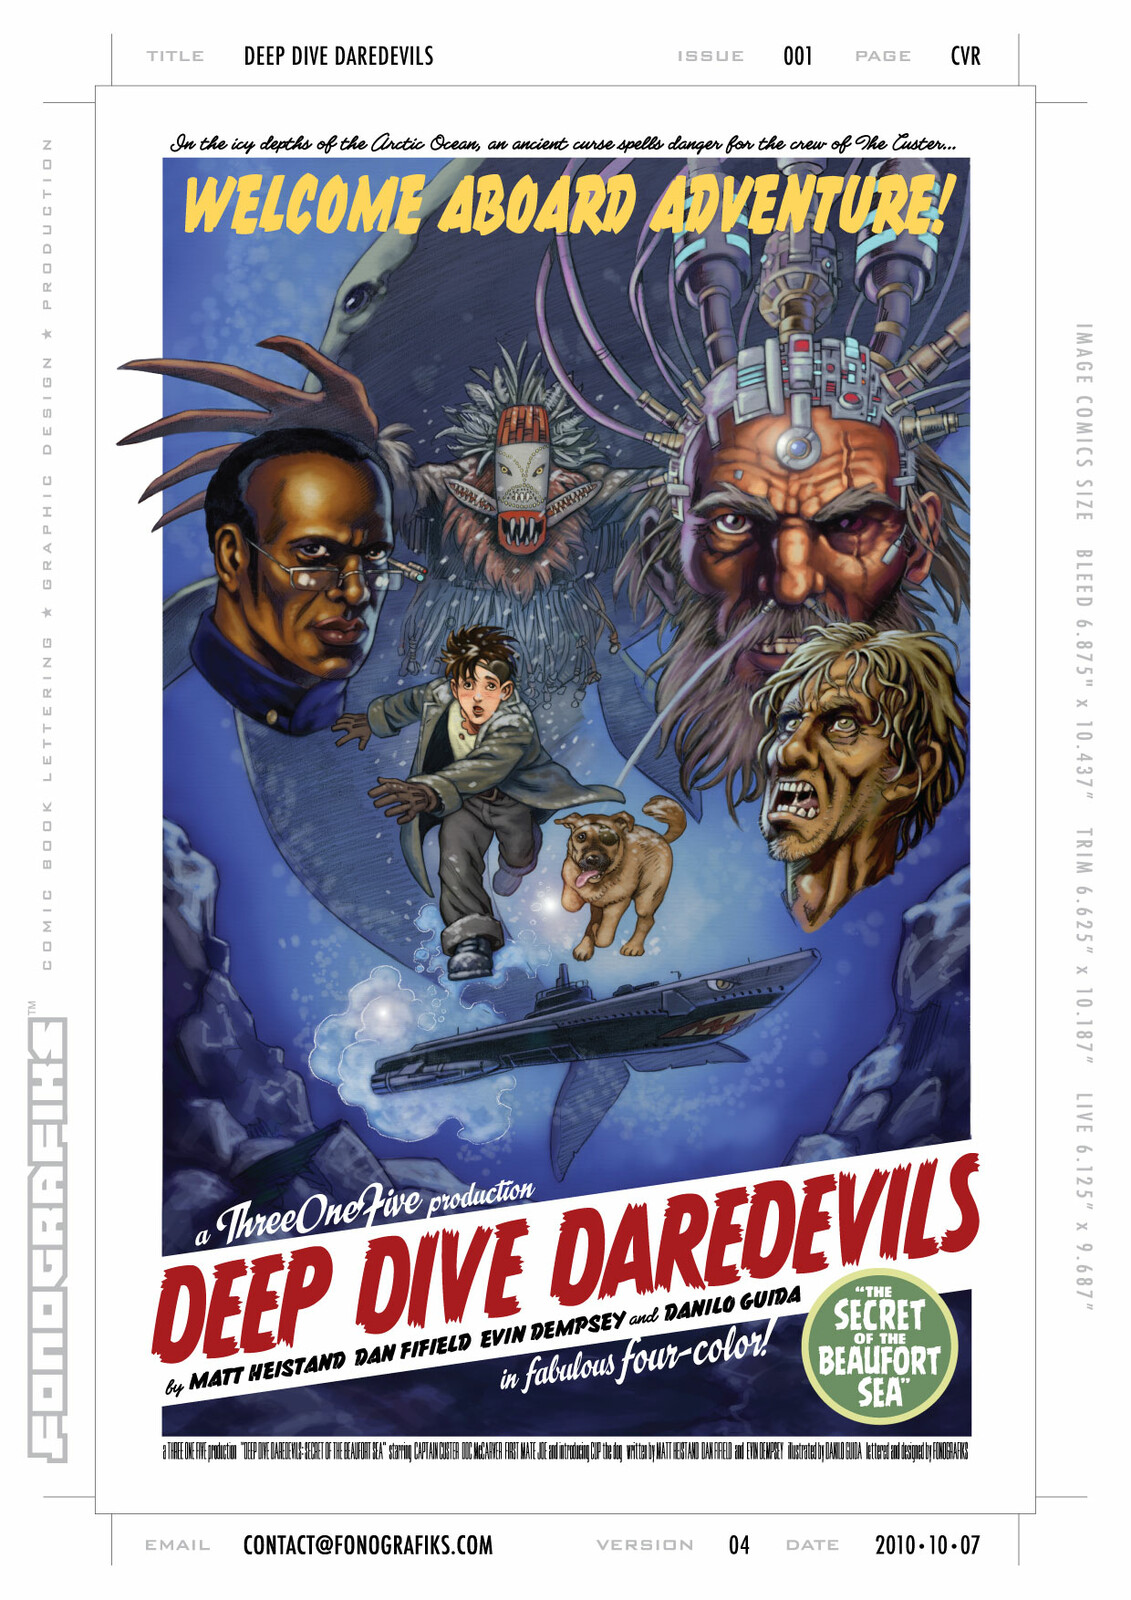 Deep Dive Daredevils poster